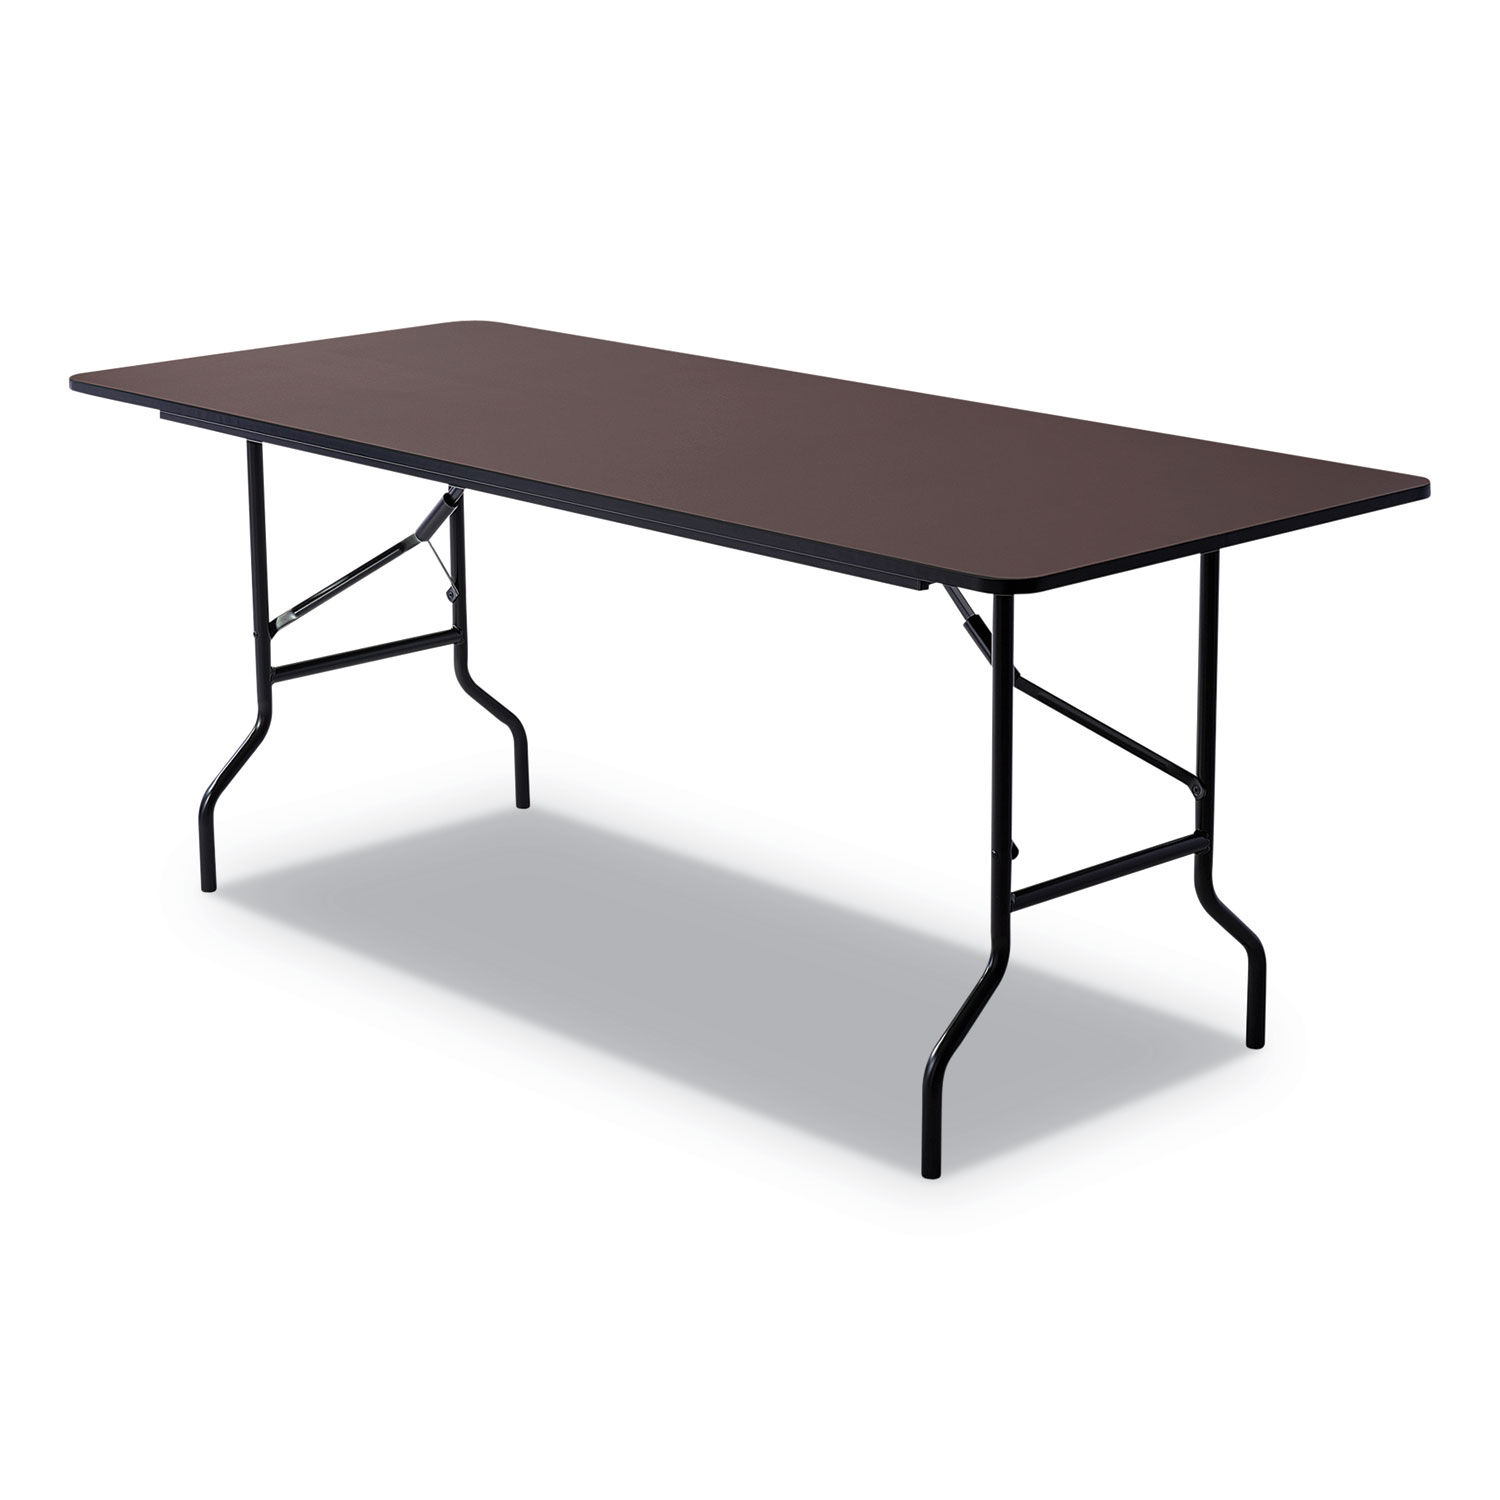 OfficeWorks Classic Wood-Laminate Folding Table Curved Legs, Rectangular, 72w x 30d x 29h, Walnut